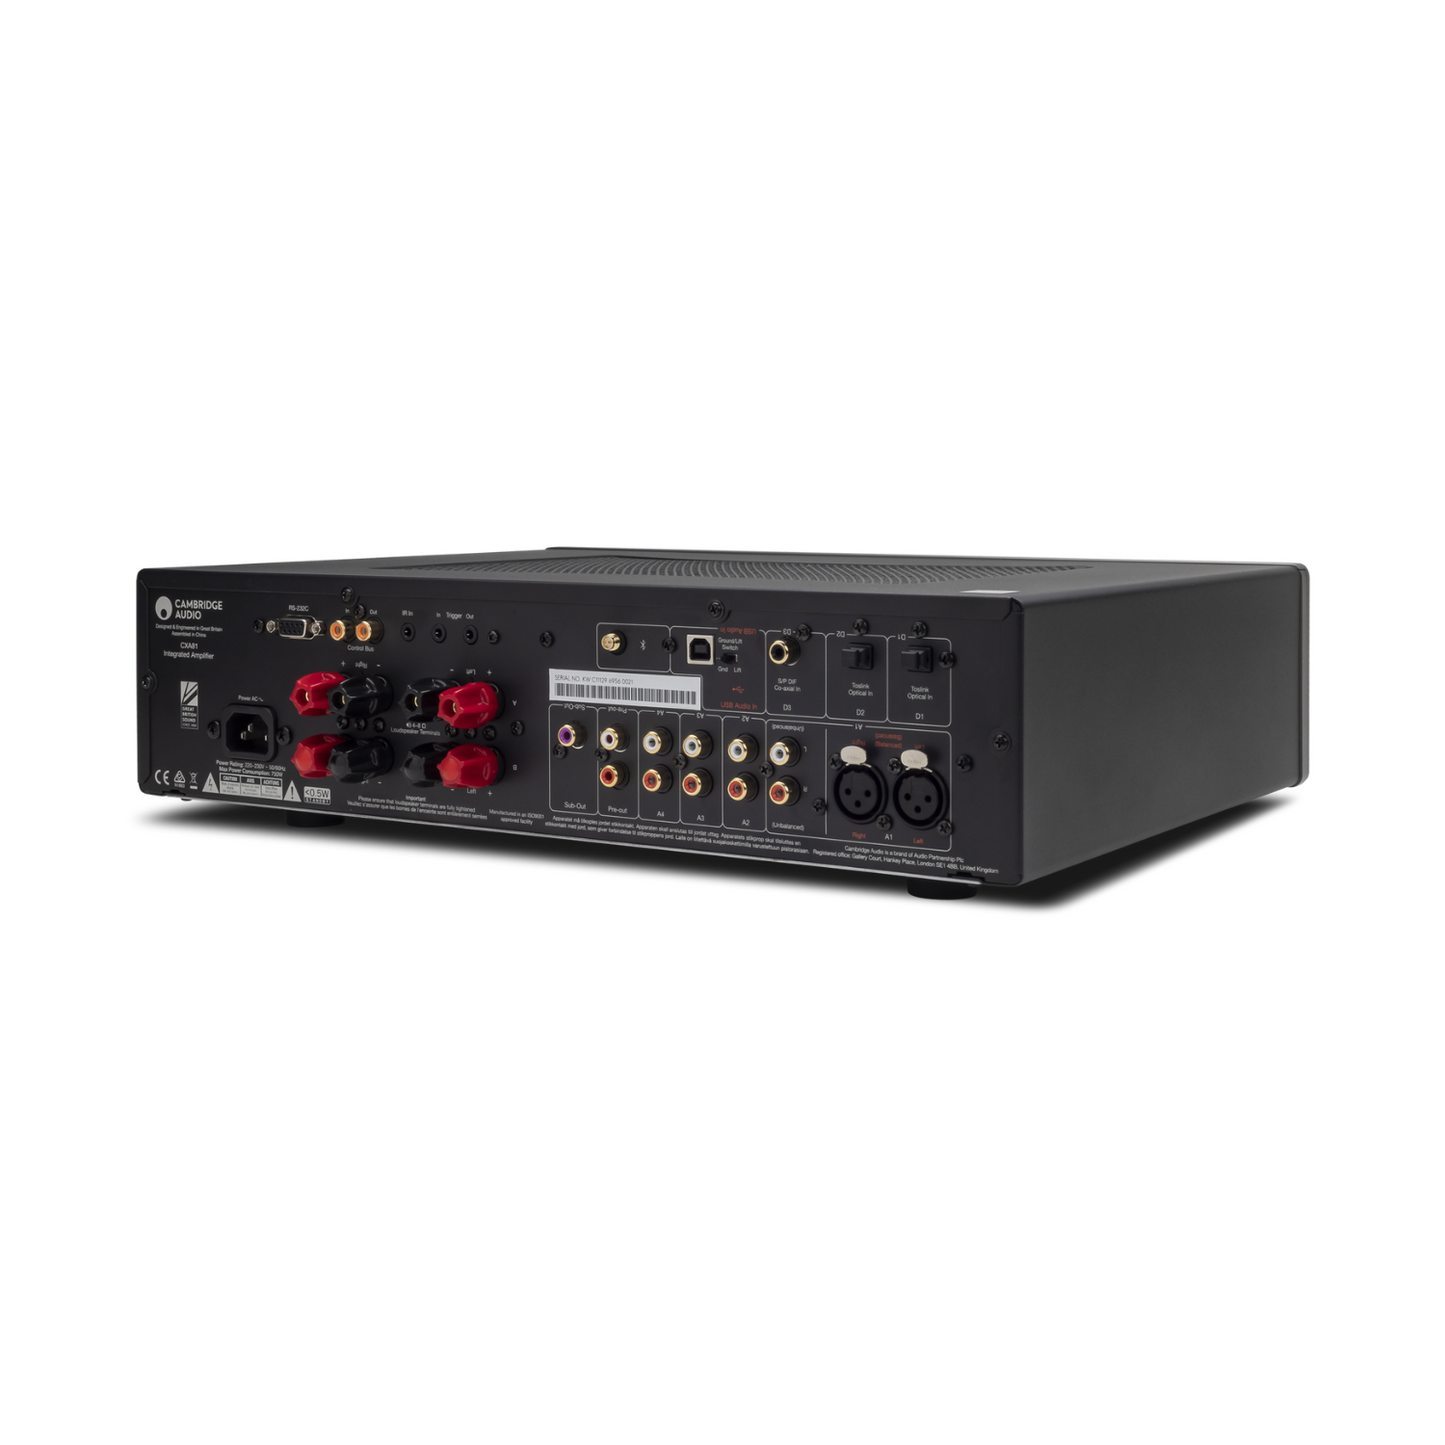 Cambridge Audio CXA81 Mk II Integrated Stereo Amplifier